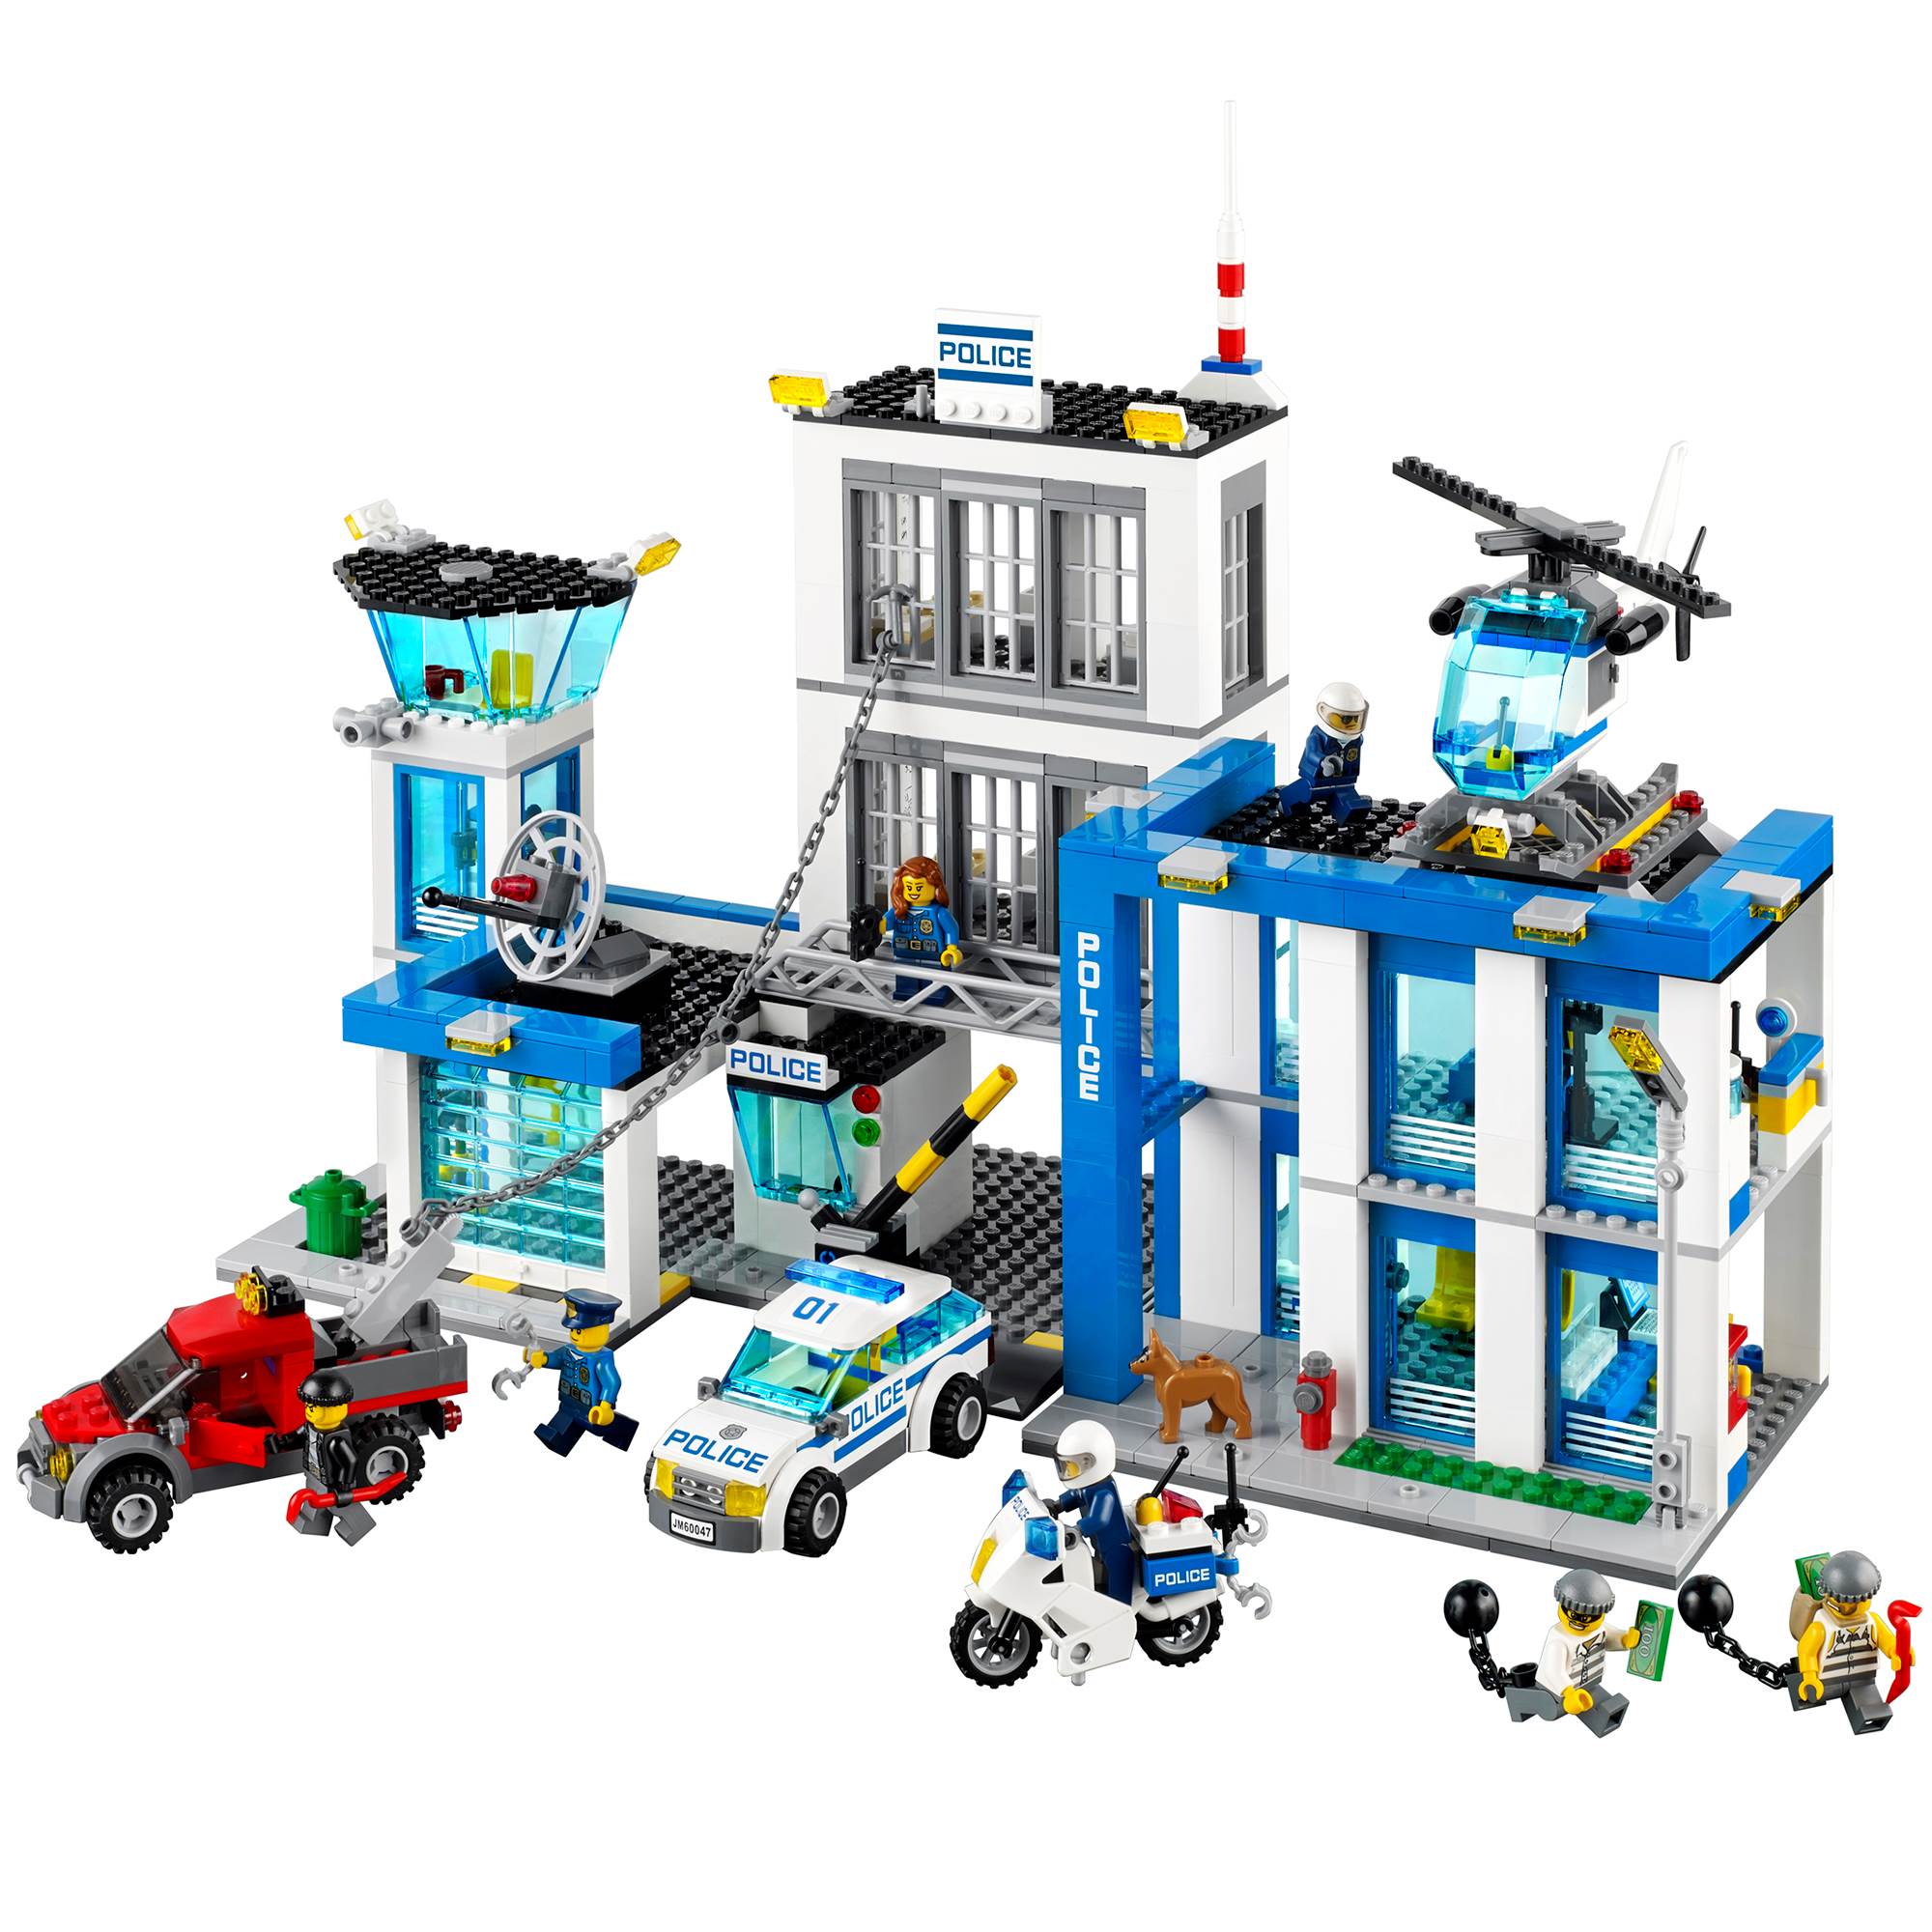 LEGO City 60047 - Police Station - image 1 of 7